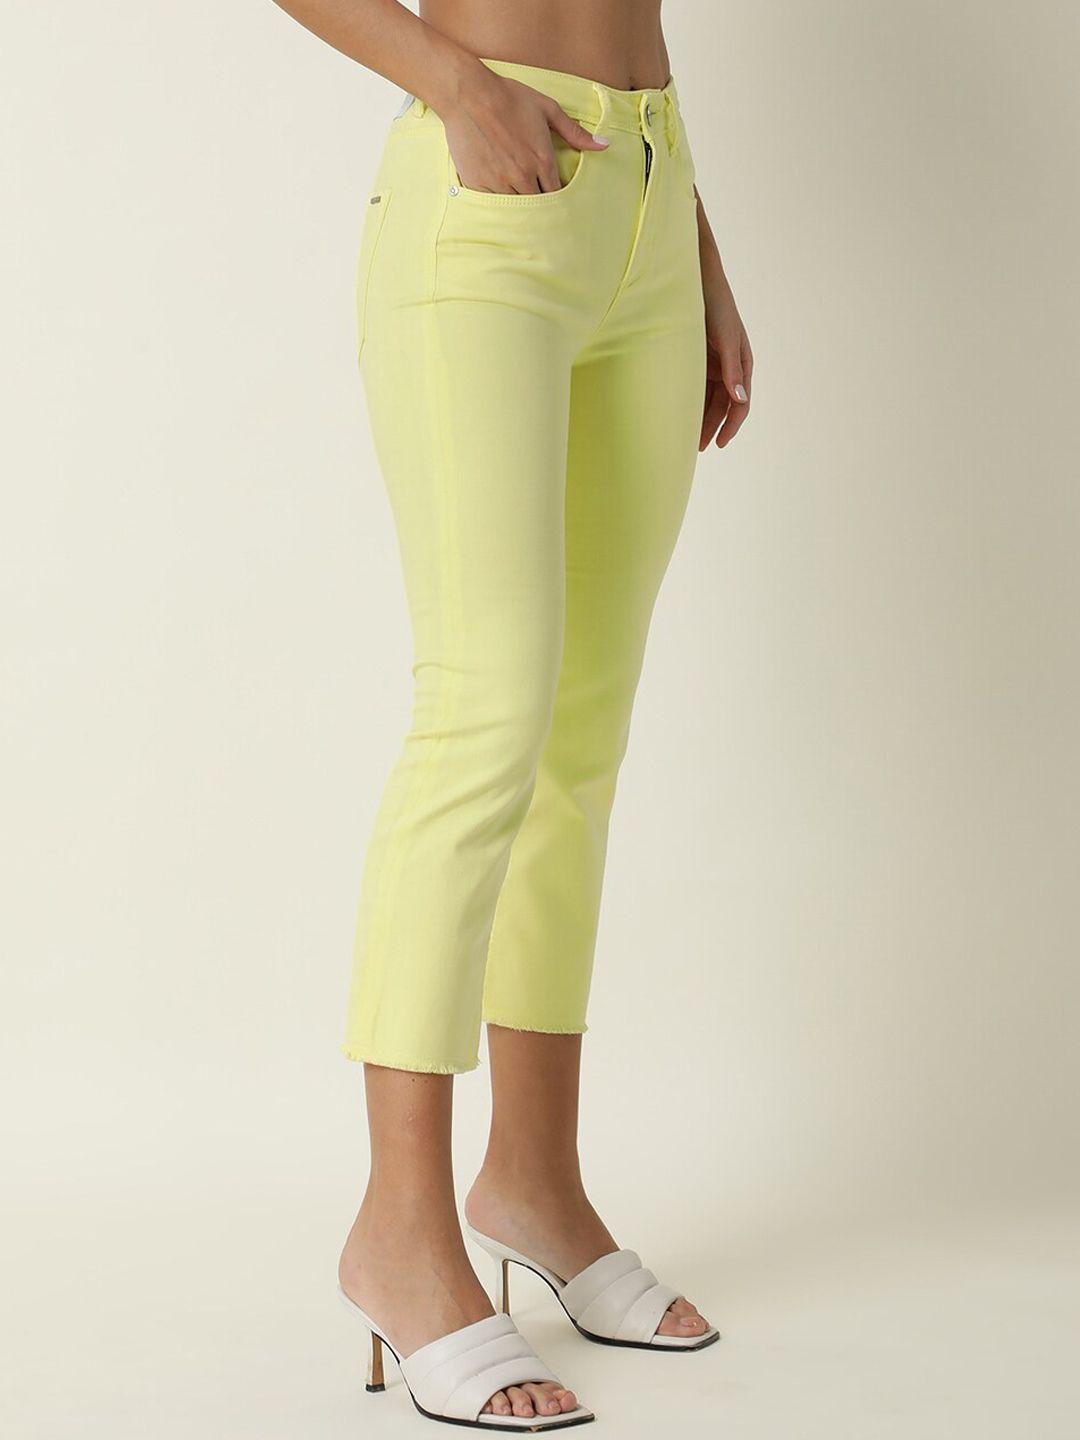 rareism women yellow slim fit jeans